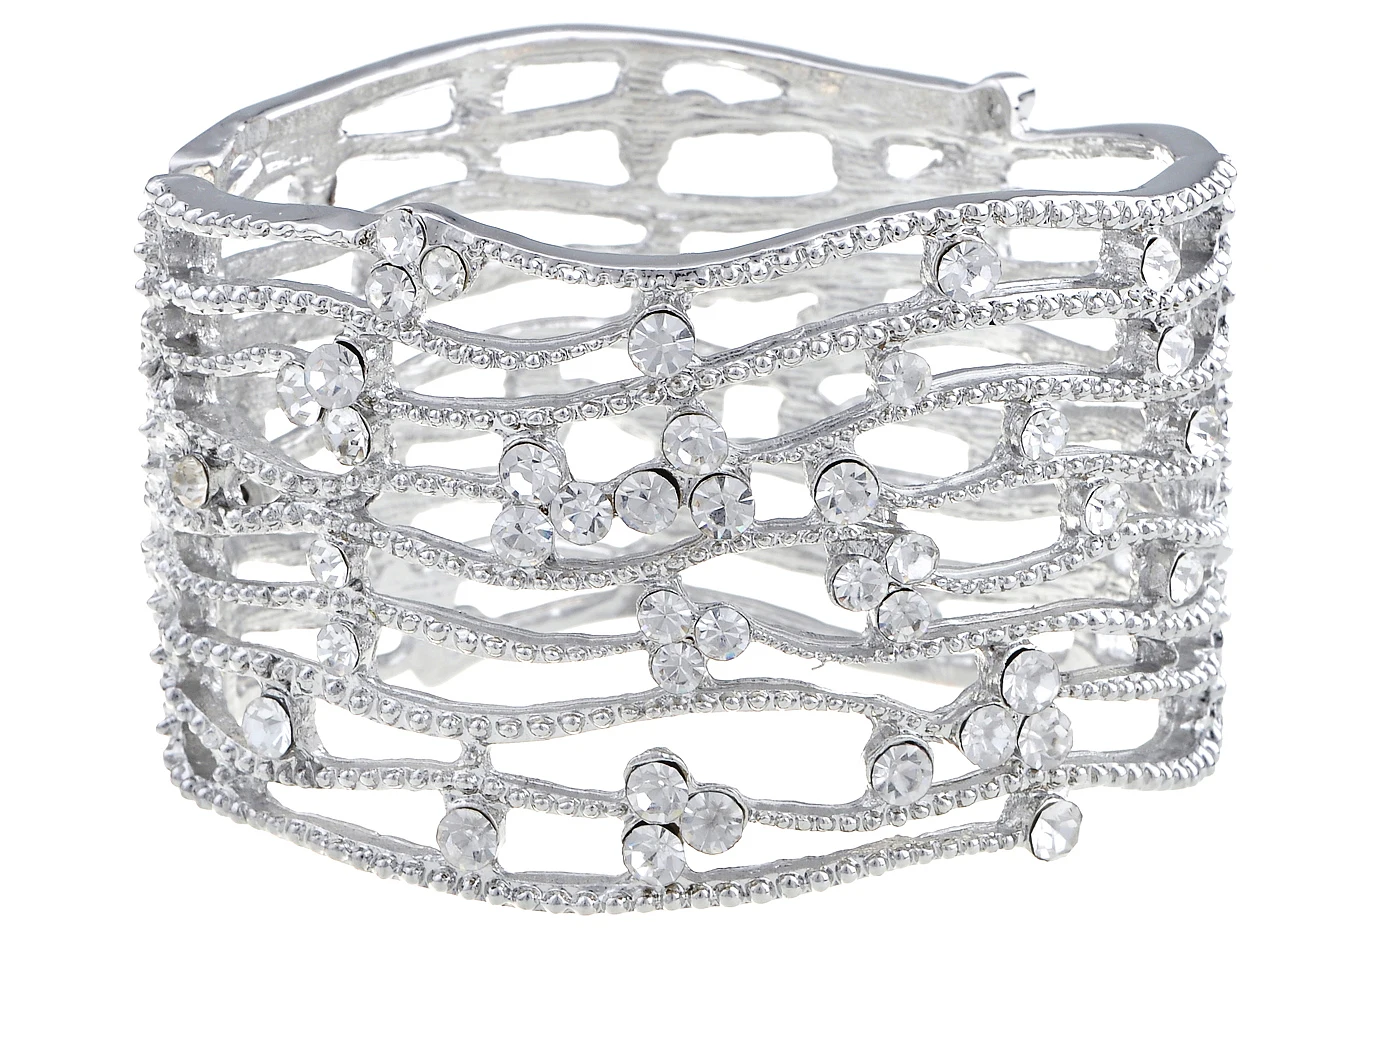 

Antique-Inspire Silvery tone Crystal Rhinestone Ocean Wave Bracelet Bangle Cuff